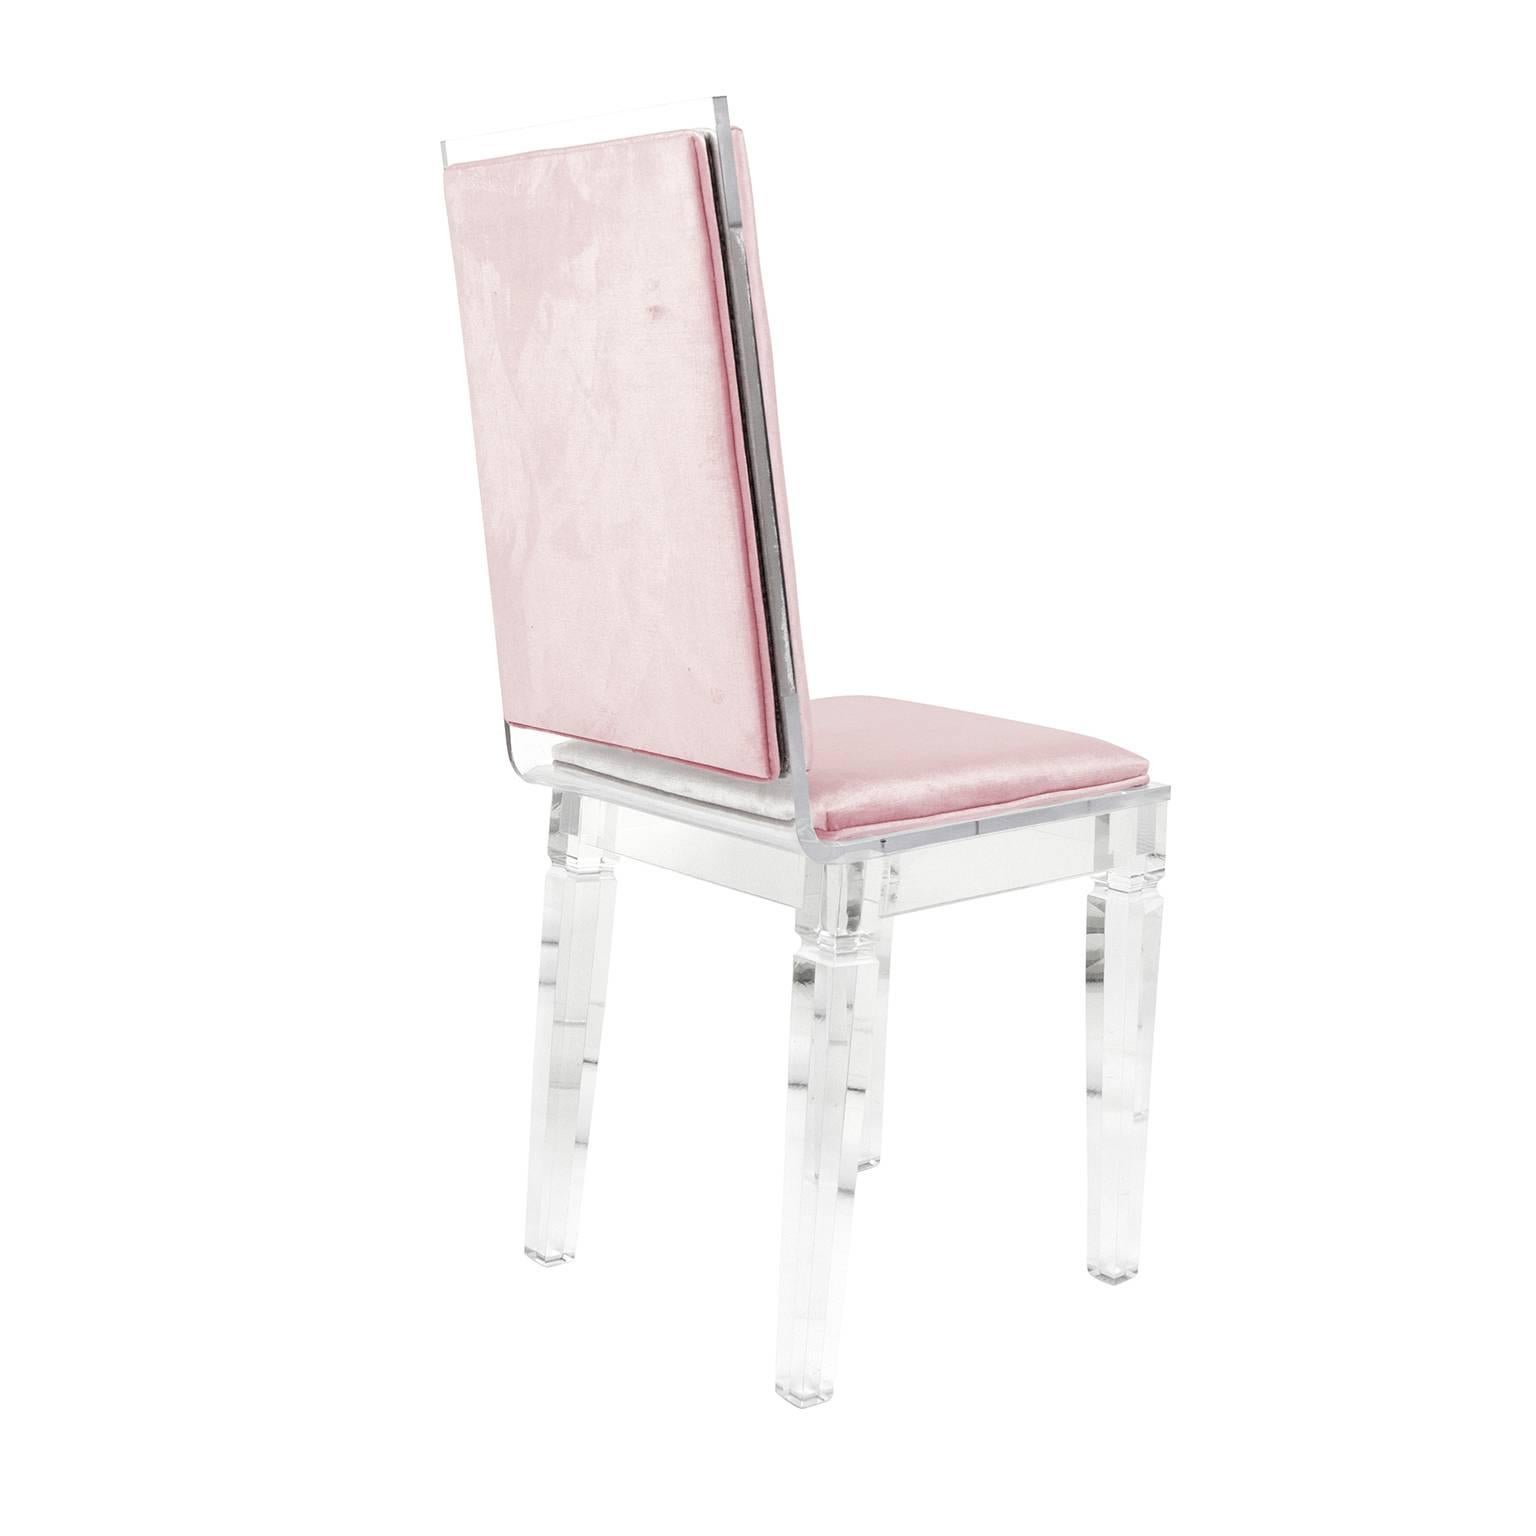 Modshop's Palm Beach Lucite chair in blush velvet.
Measures: 19